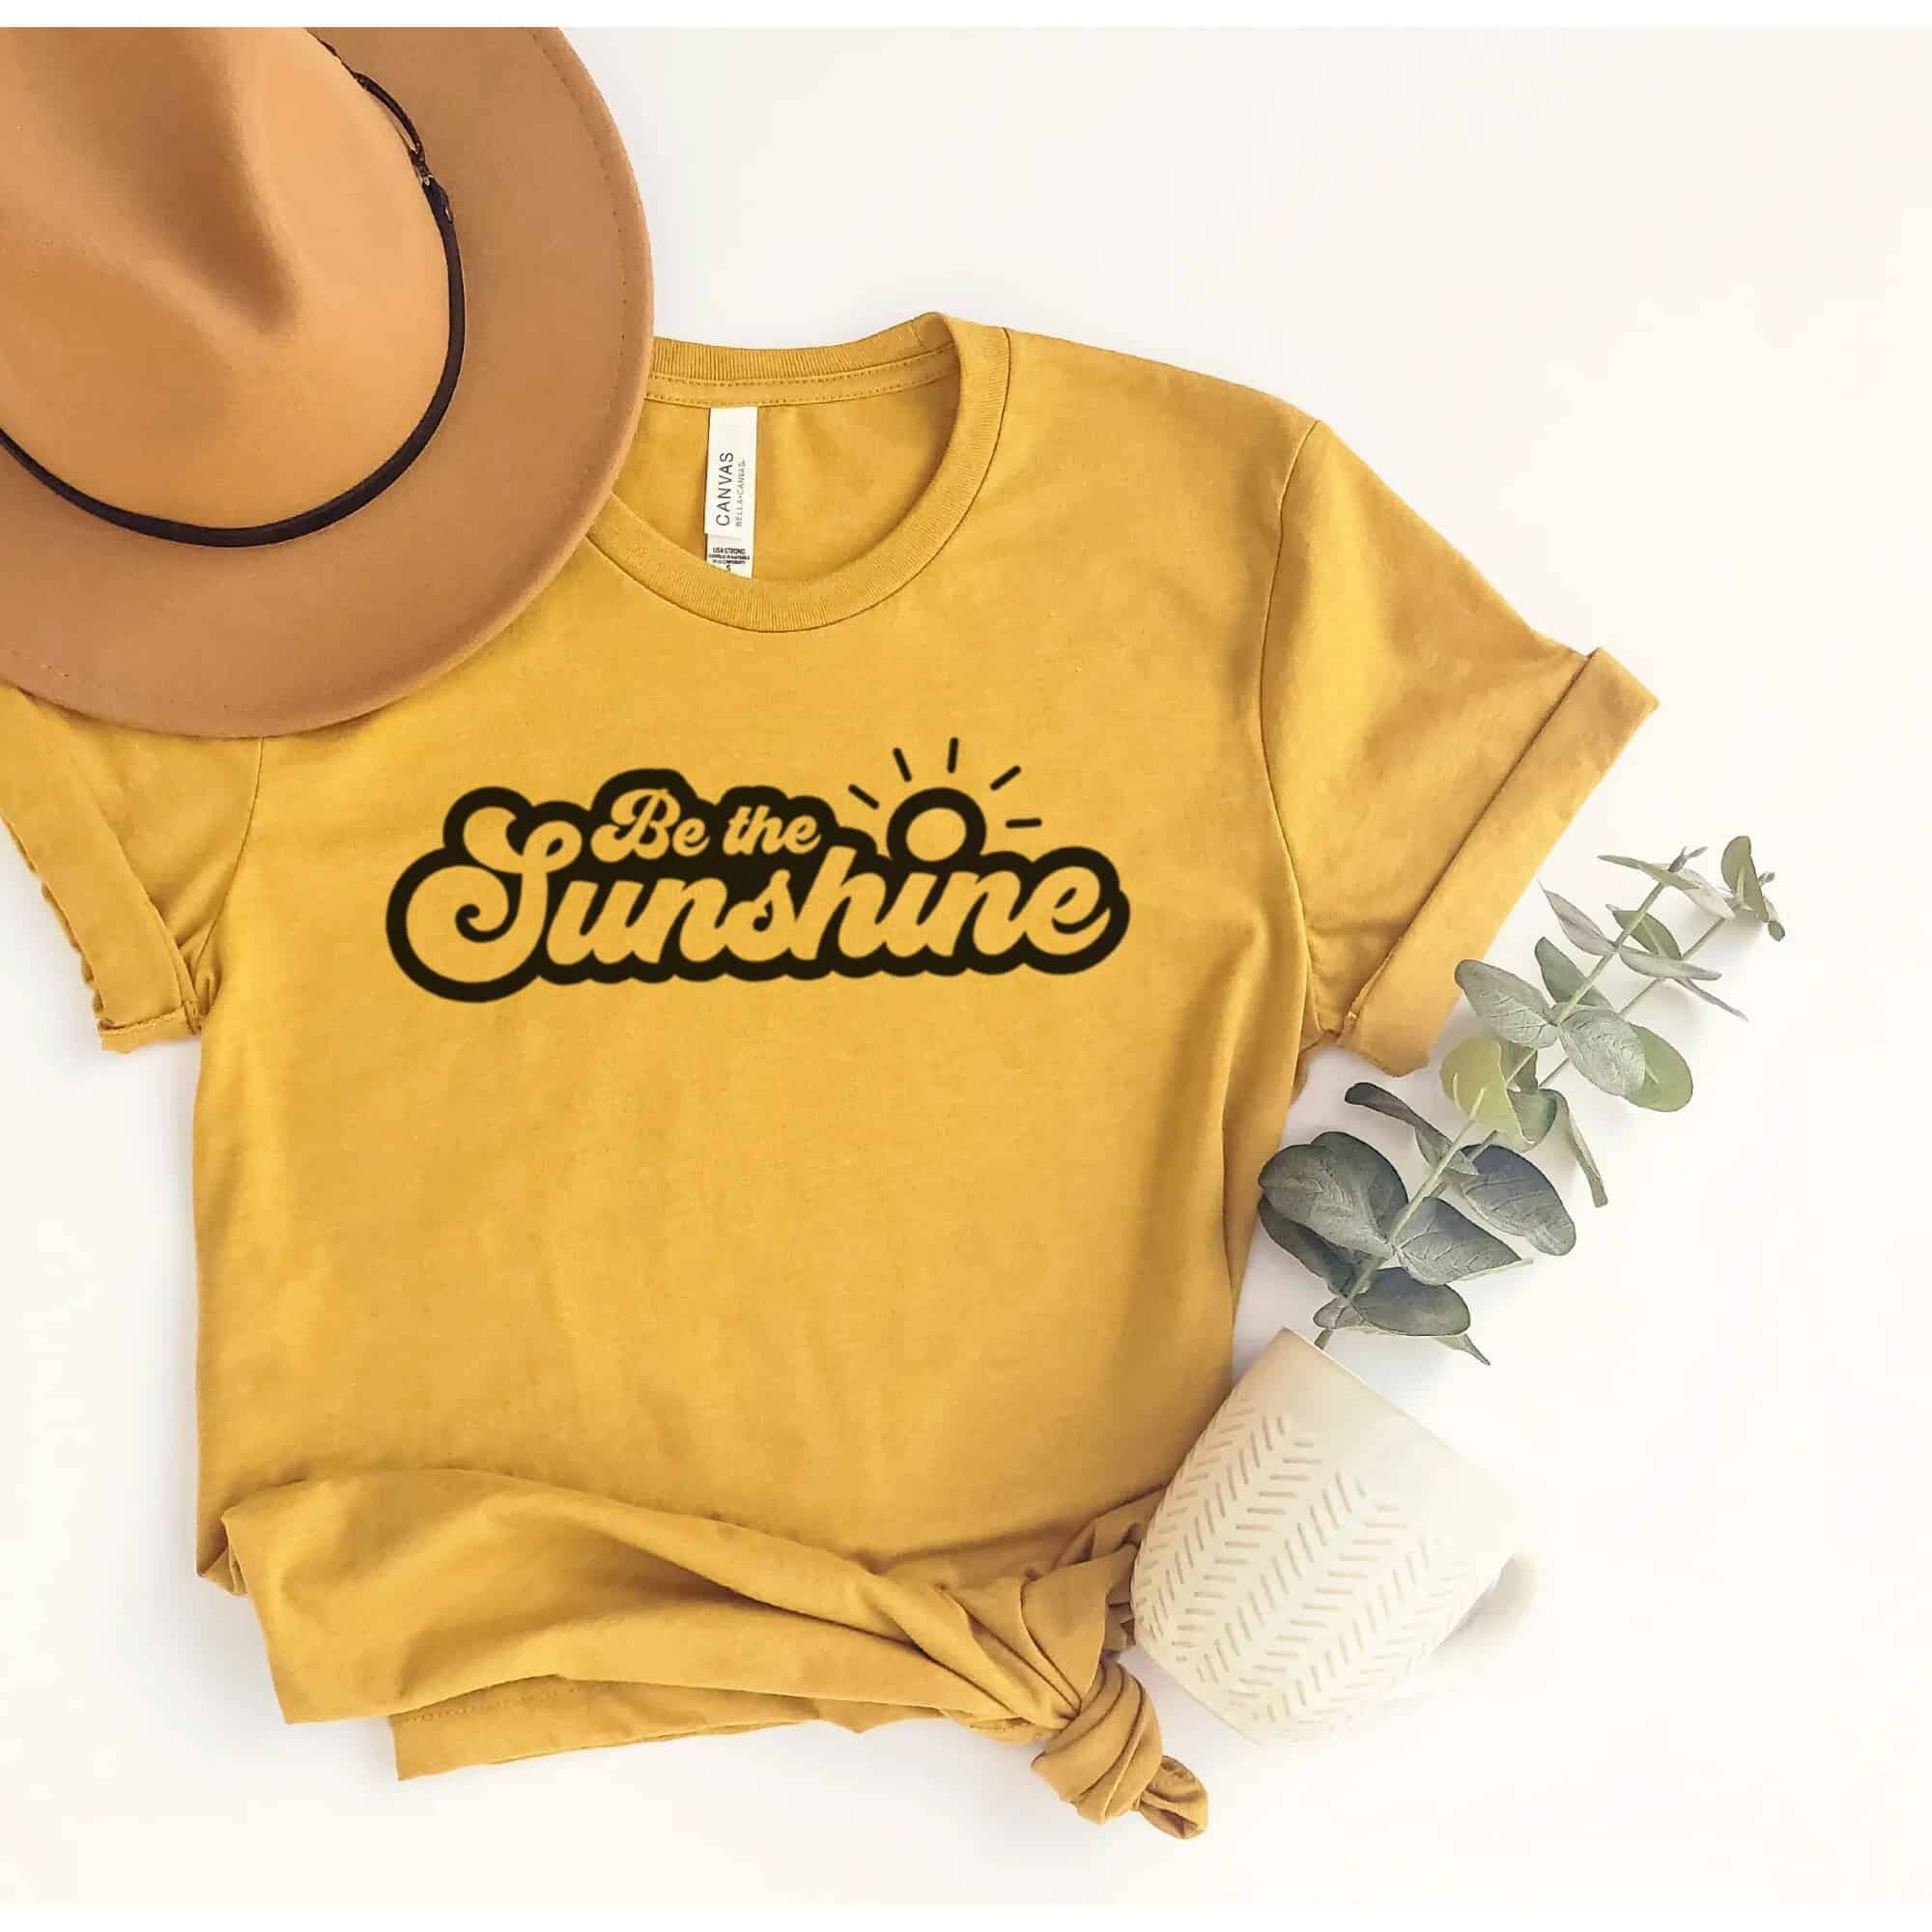 Positivity Shirt Motivational T-Shirt Cute Tee Be Someone's Sunshine T-Shirt